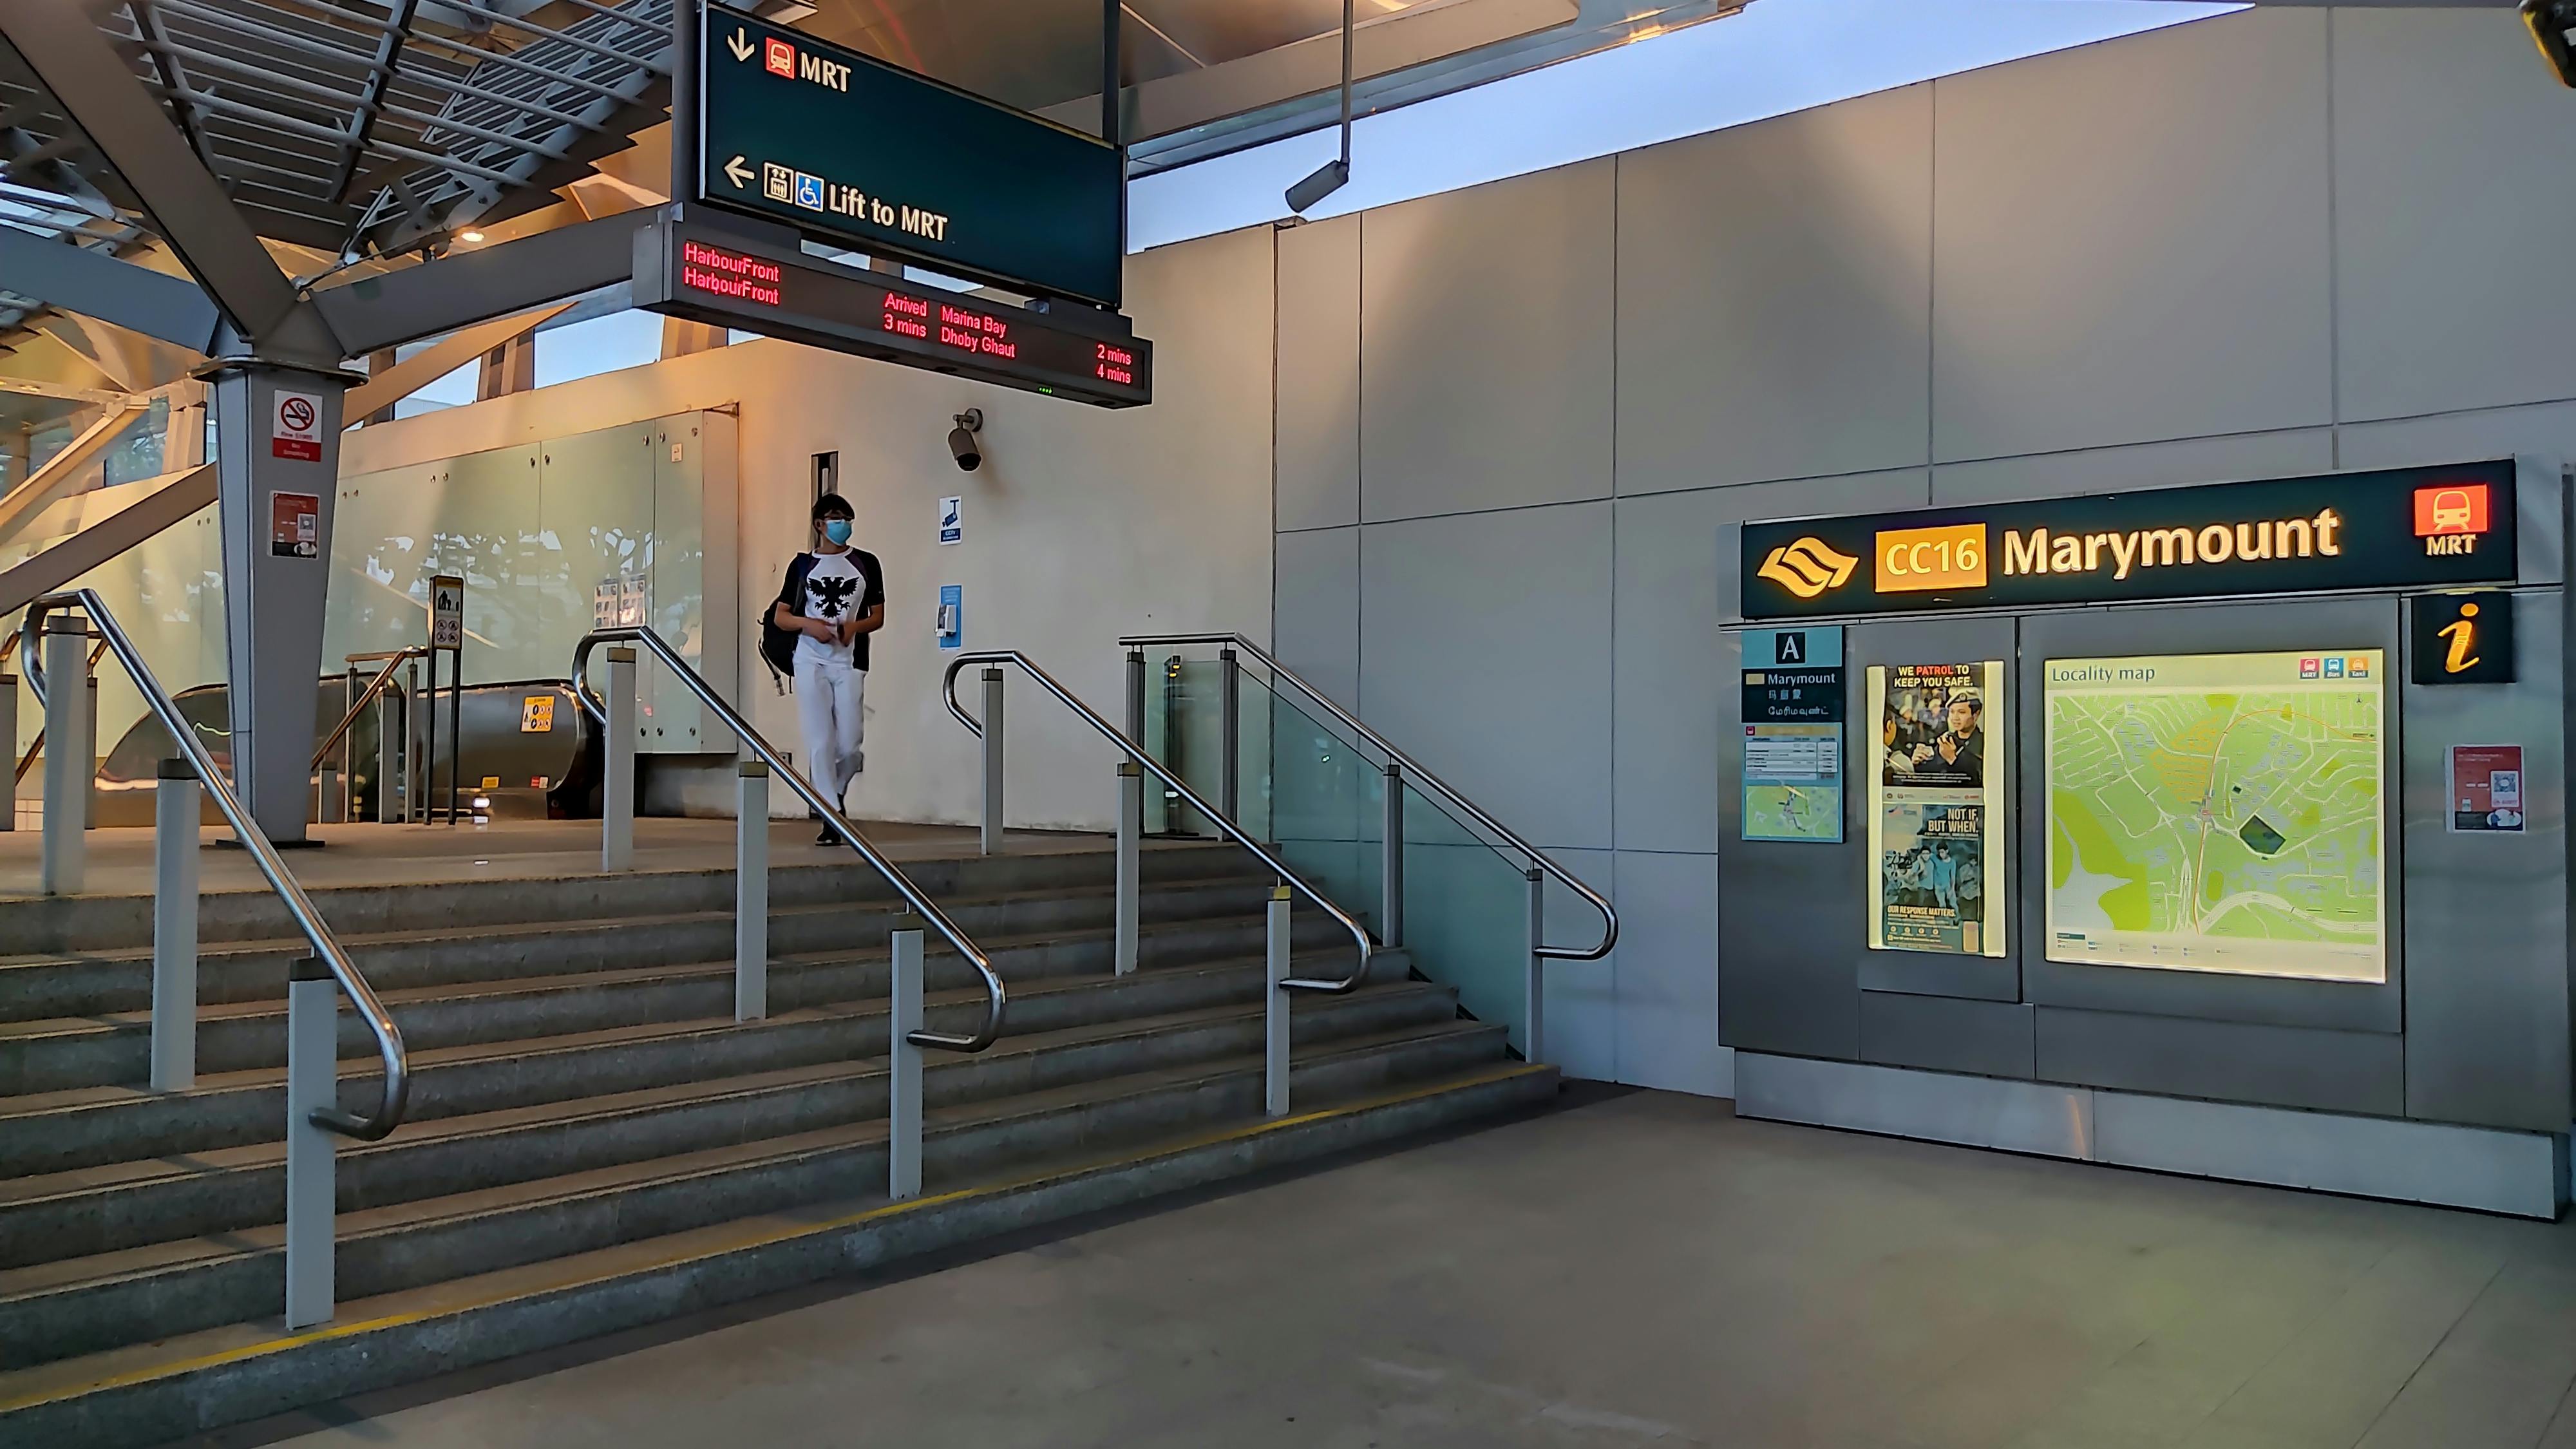 Marymount MRT Station